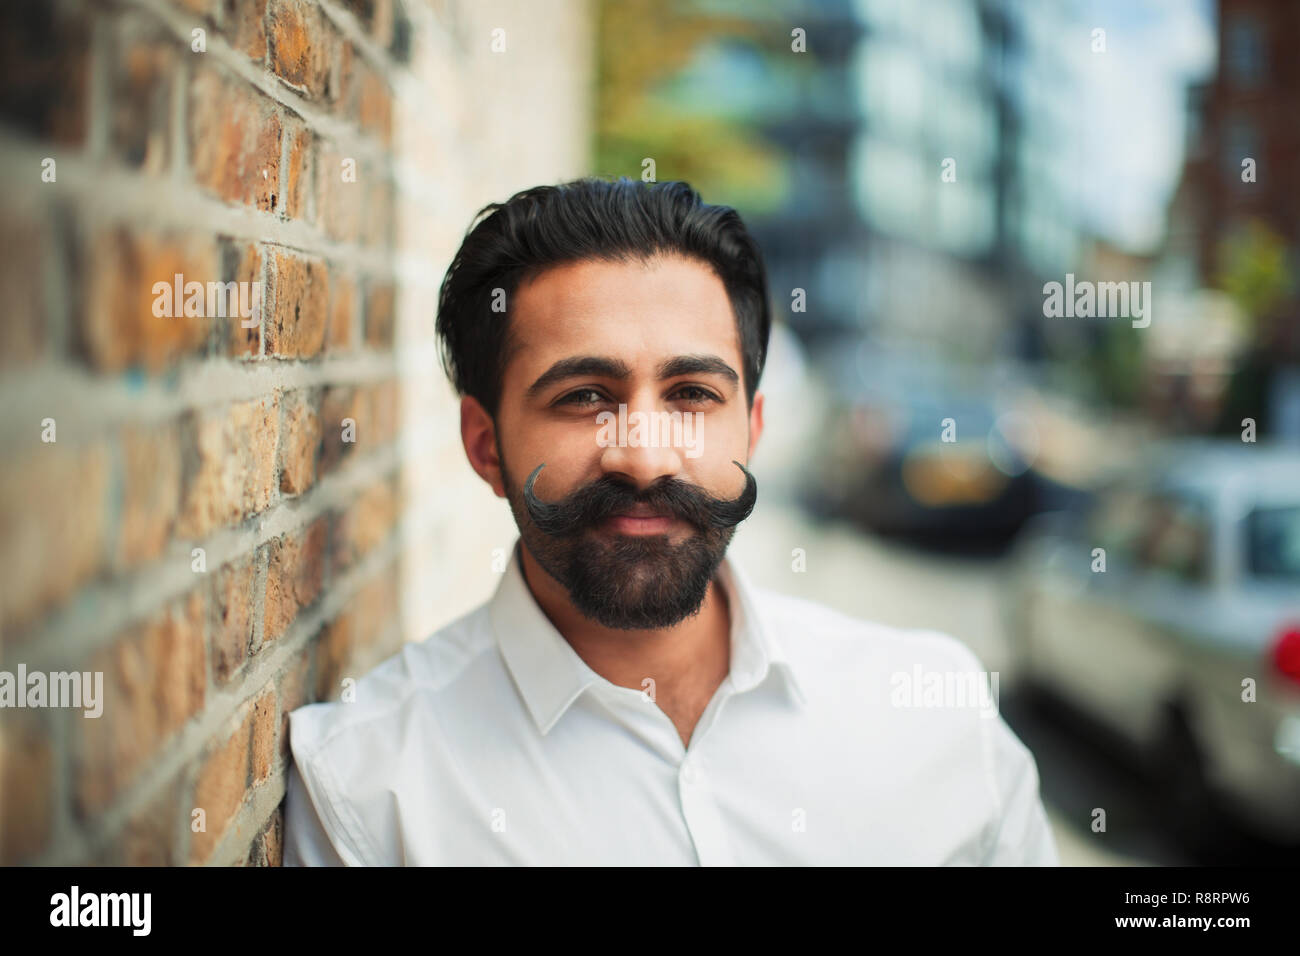 Portrait confident young man with handlebar mustache on urban sidewalk Stock Photo